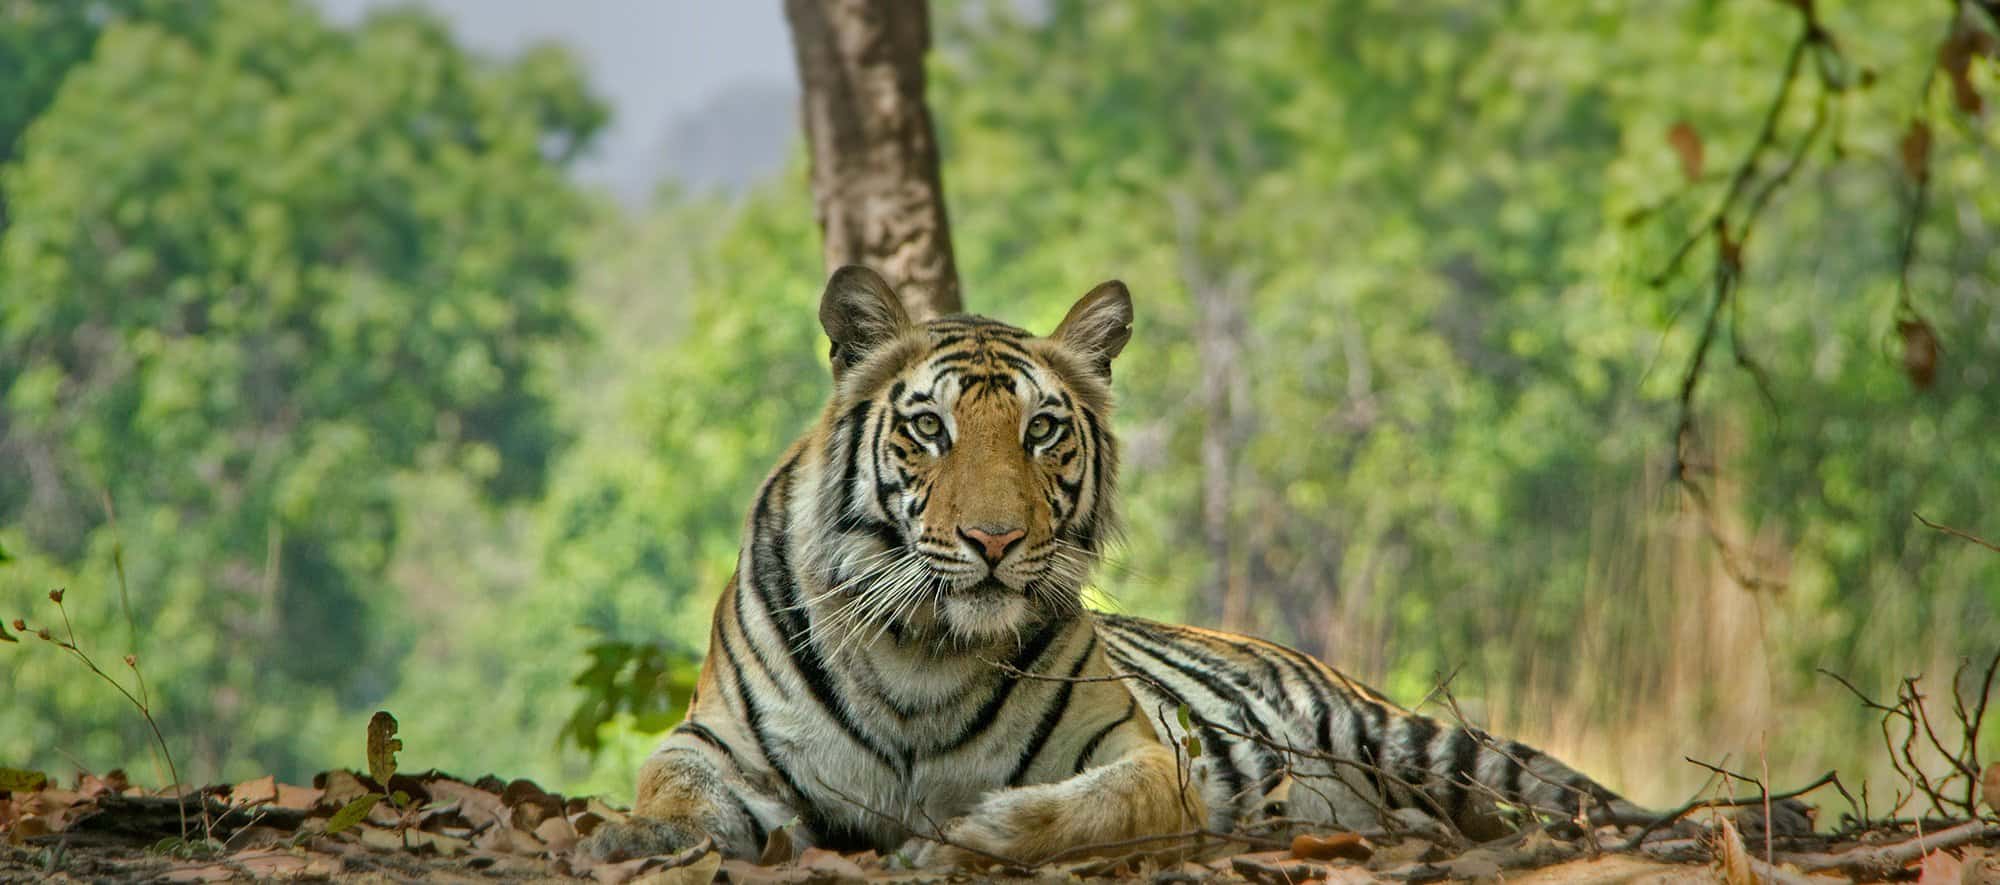 Explore Bandhavgarh National Park and Bandhavgarh Safari with Tiger Safari Bandhavgarh